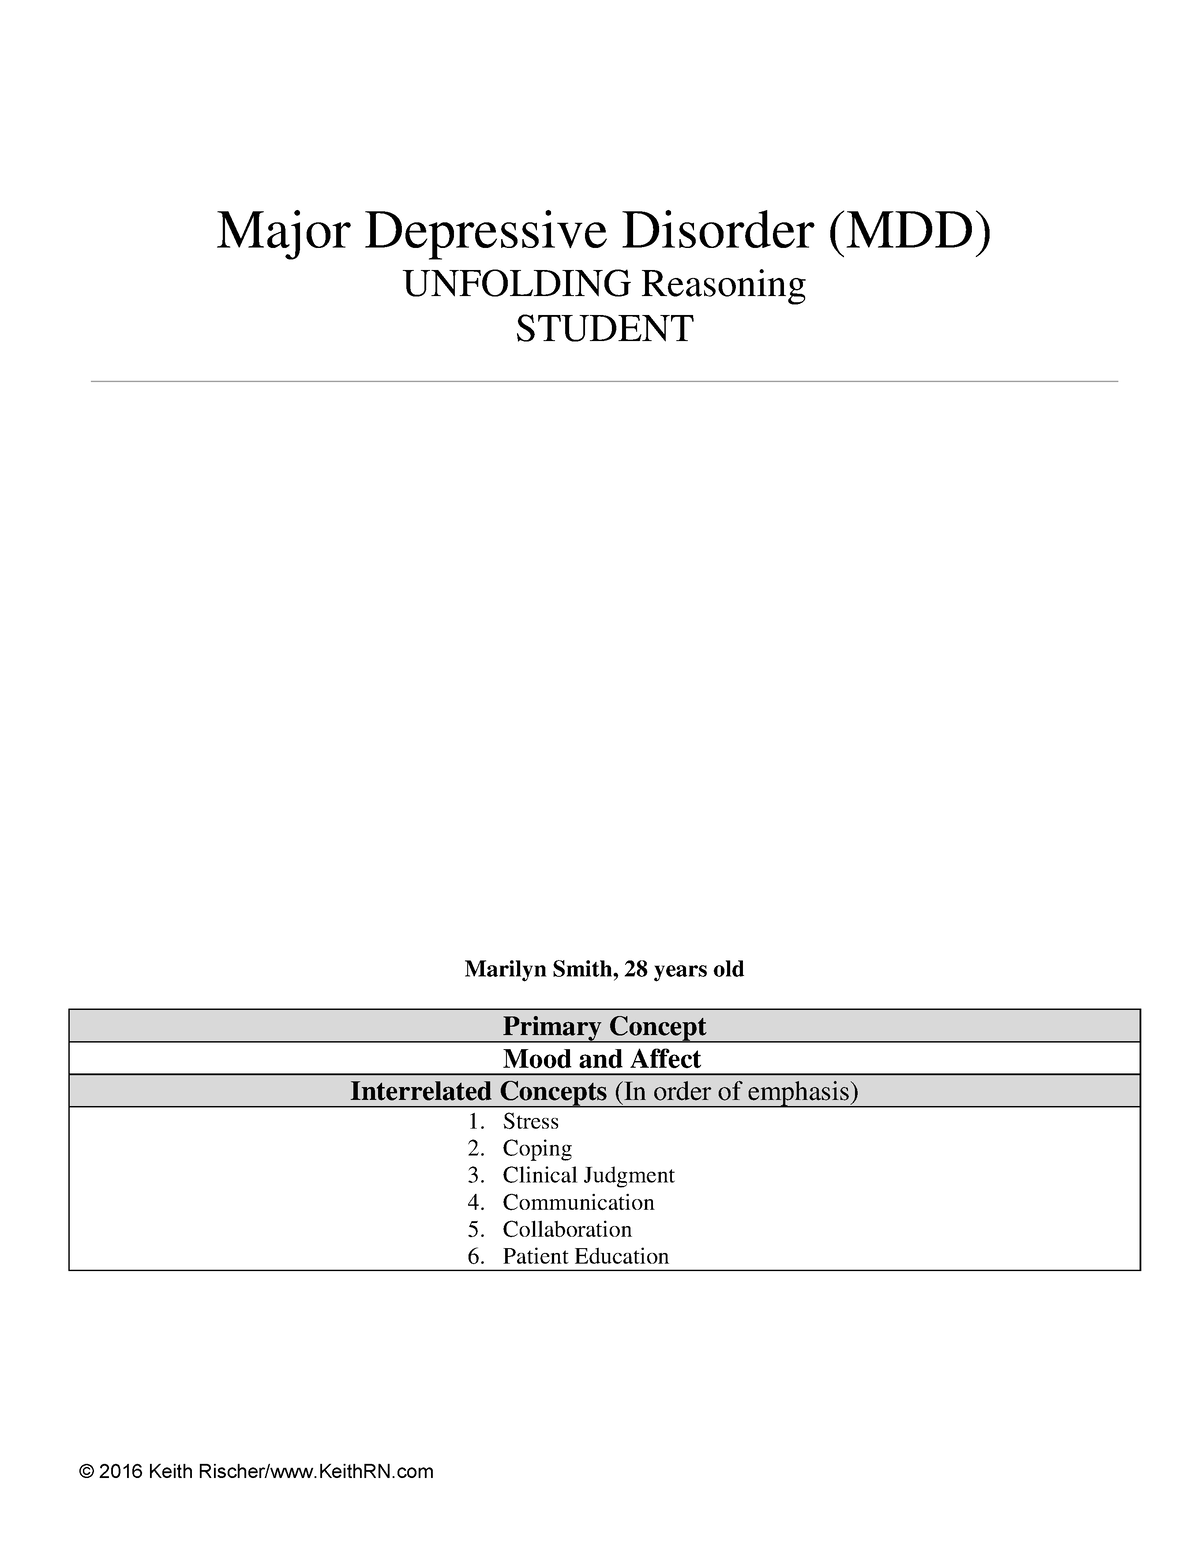 depressive disorder case study